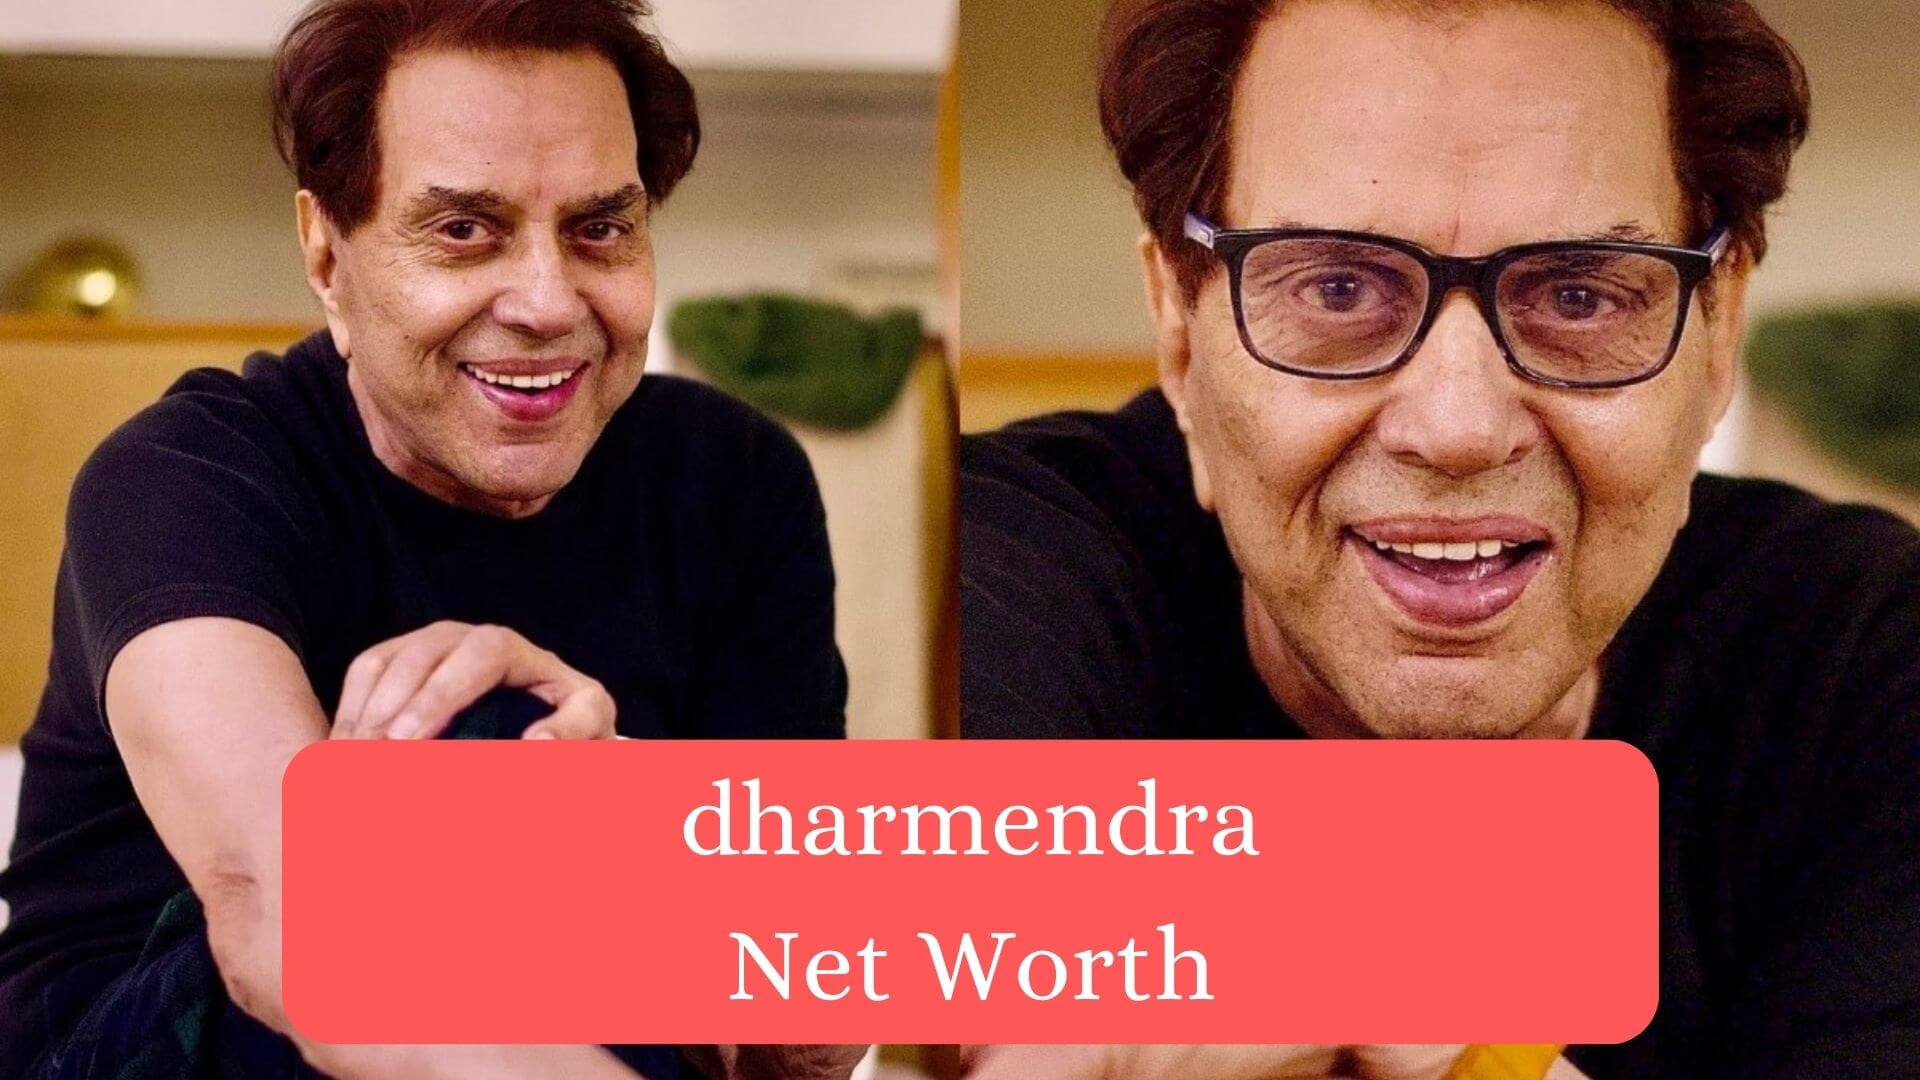 dharmendra Net Worth